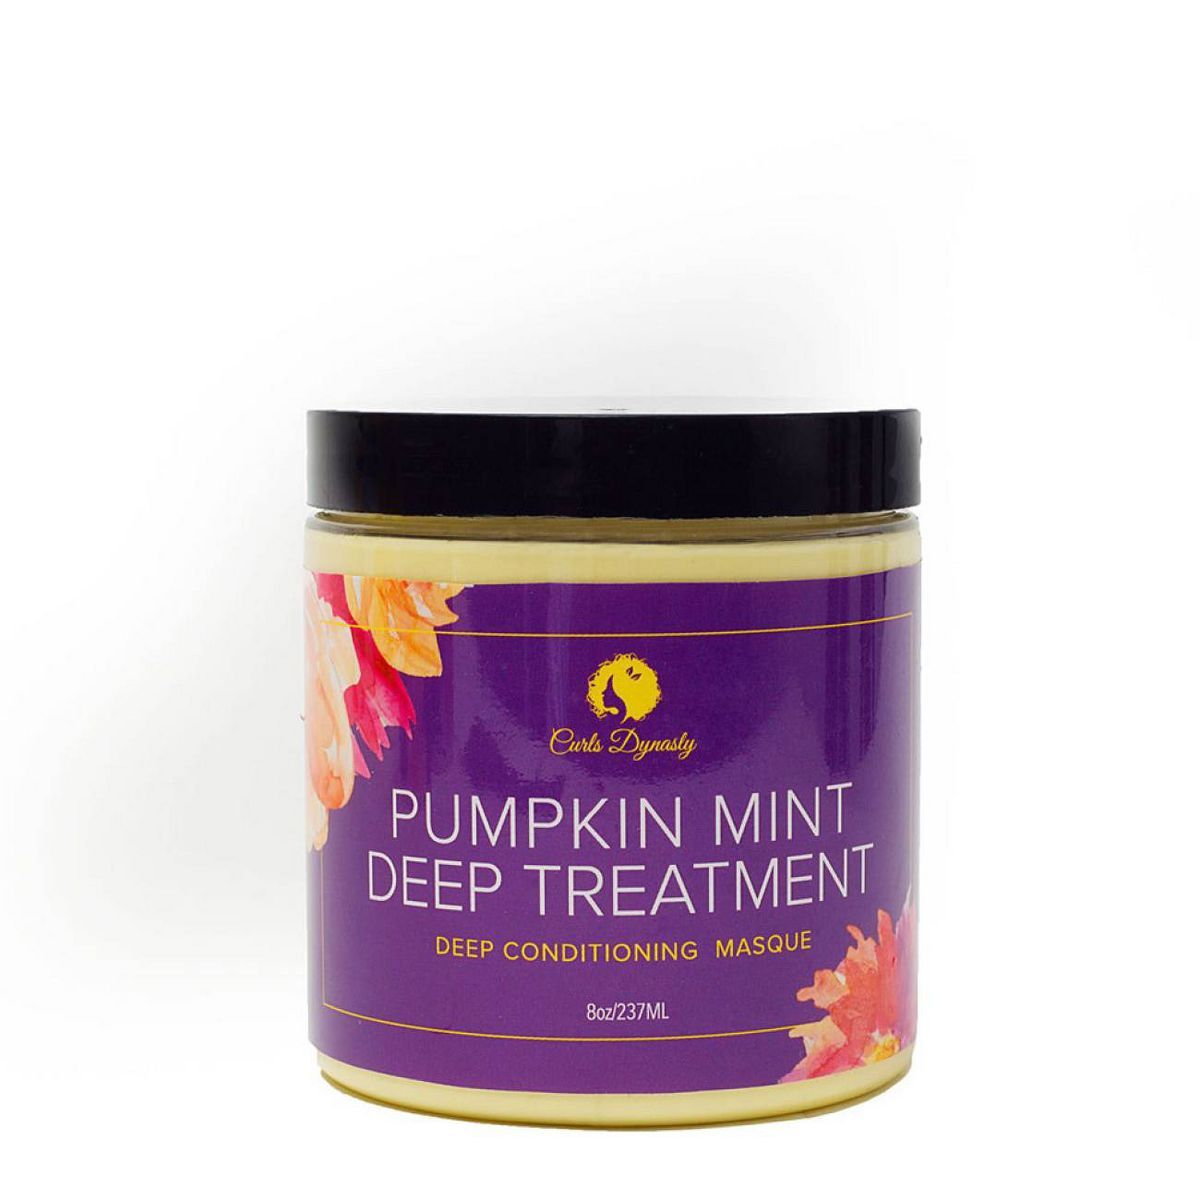 Curl Dynasty Pumpkin Mint Deep Treatment Deep Conditioning Masque - 8oz | Target